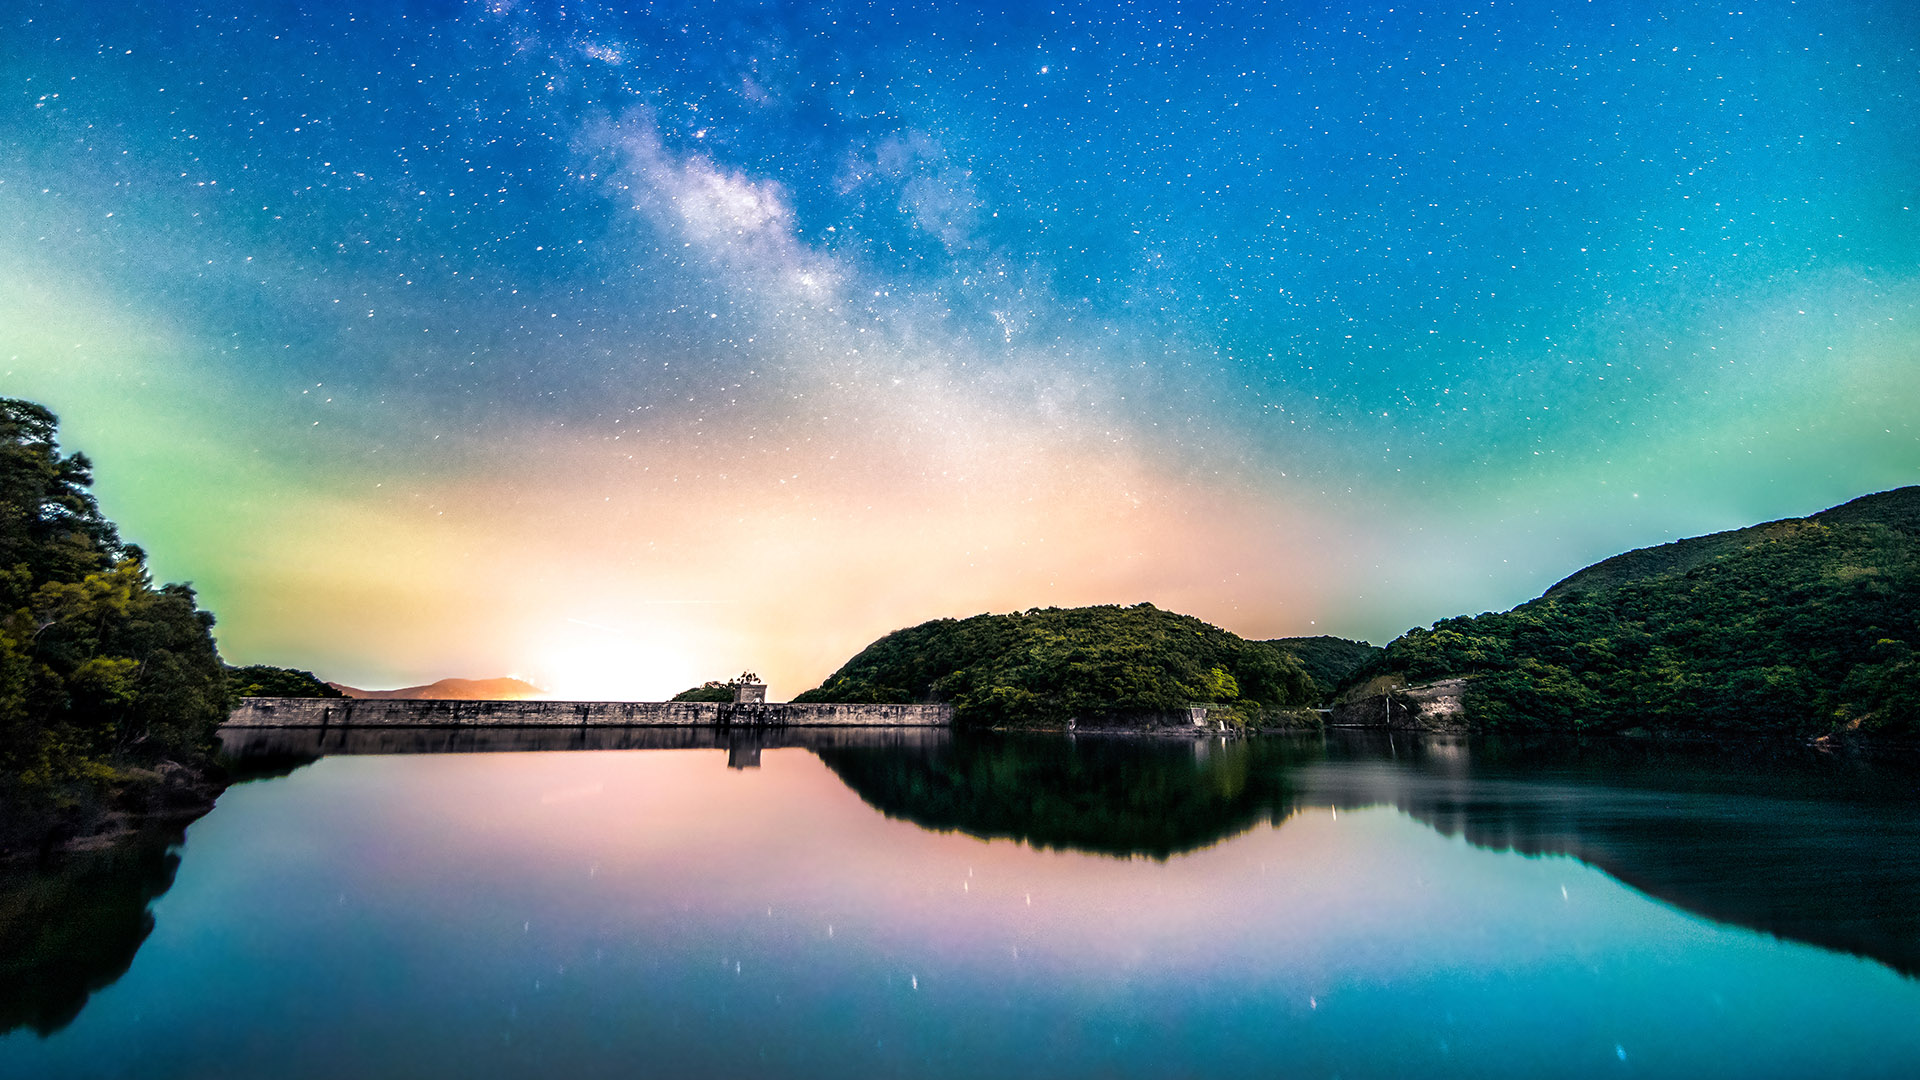 Milky way over the calm Tai Tam Park reservoir at night, Hong Kong ...